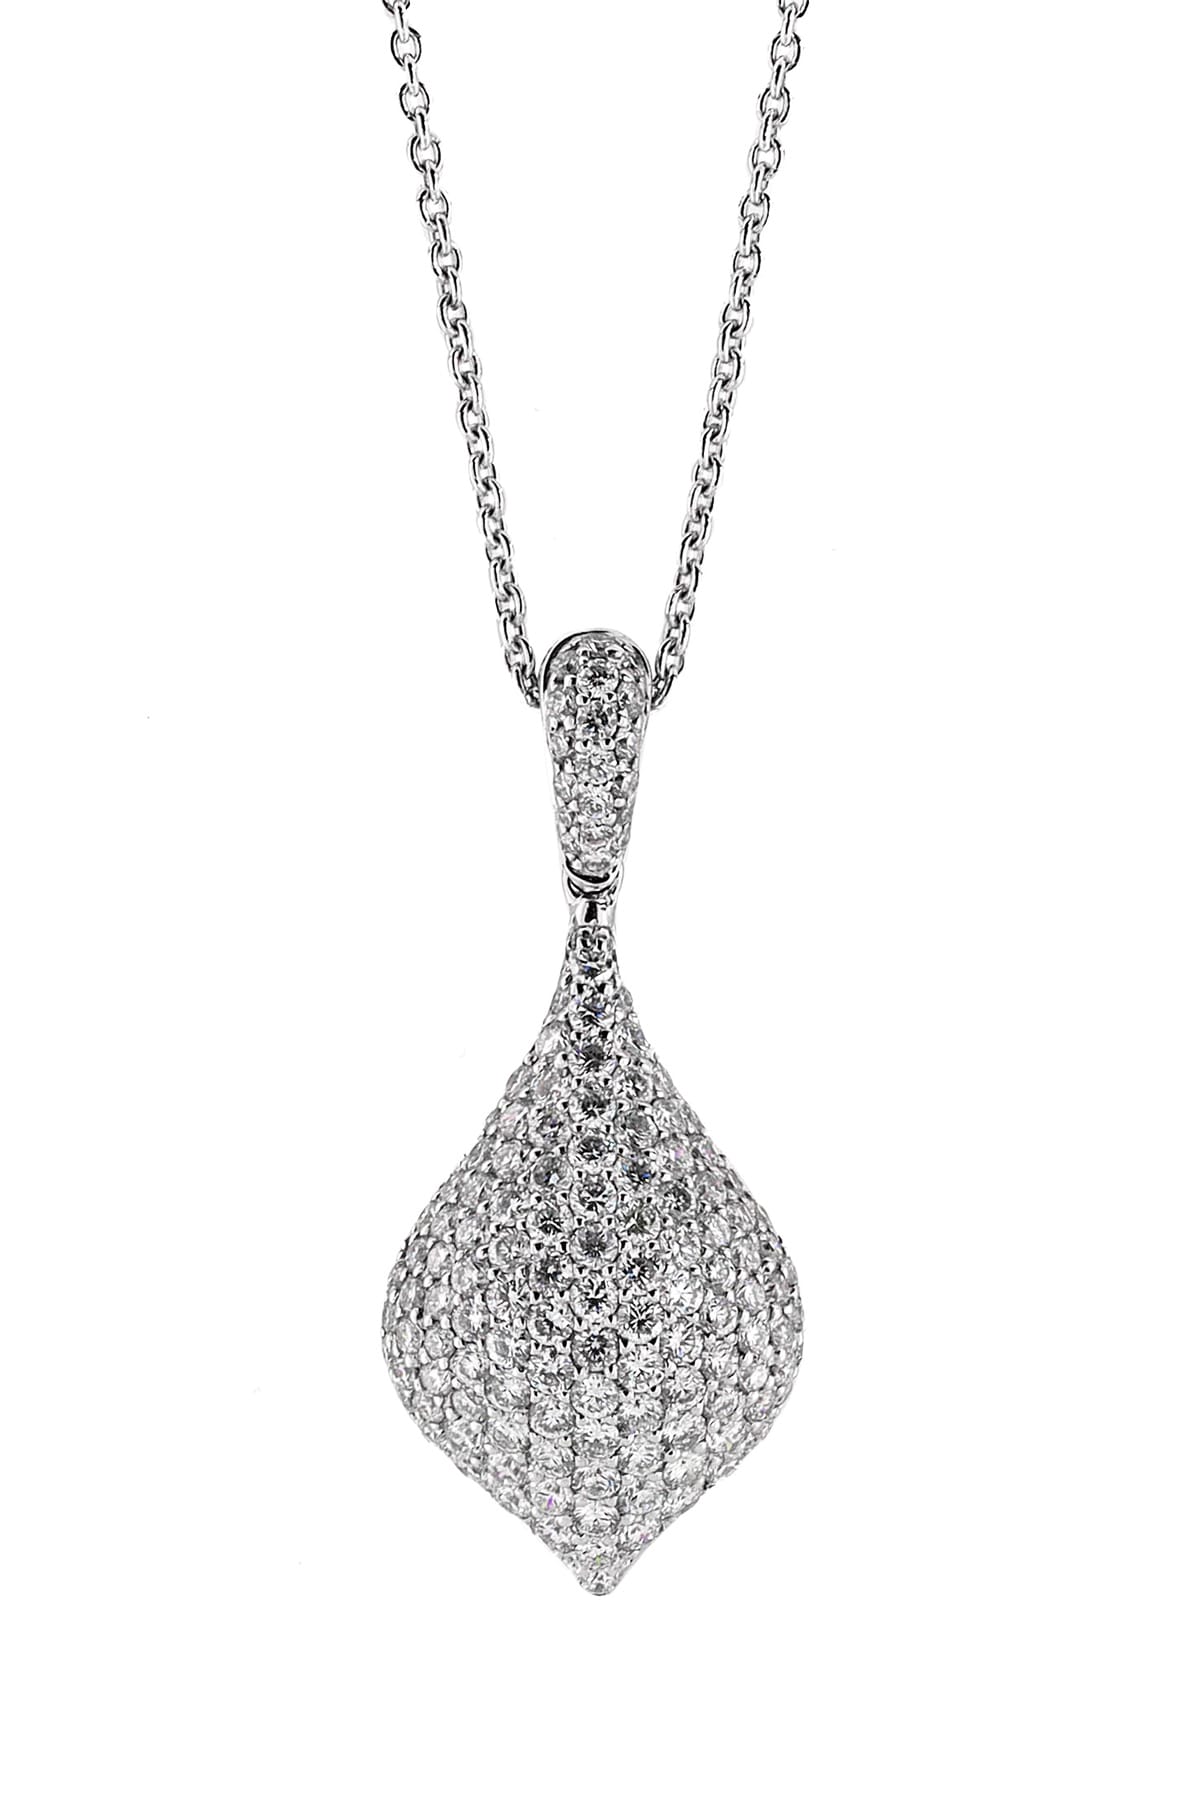 18 Carat Gold 1.00 Carat Diamond Teardrop Pendant available at LeGassick Diamonds and Jewellery Gold Coast, Australia.